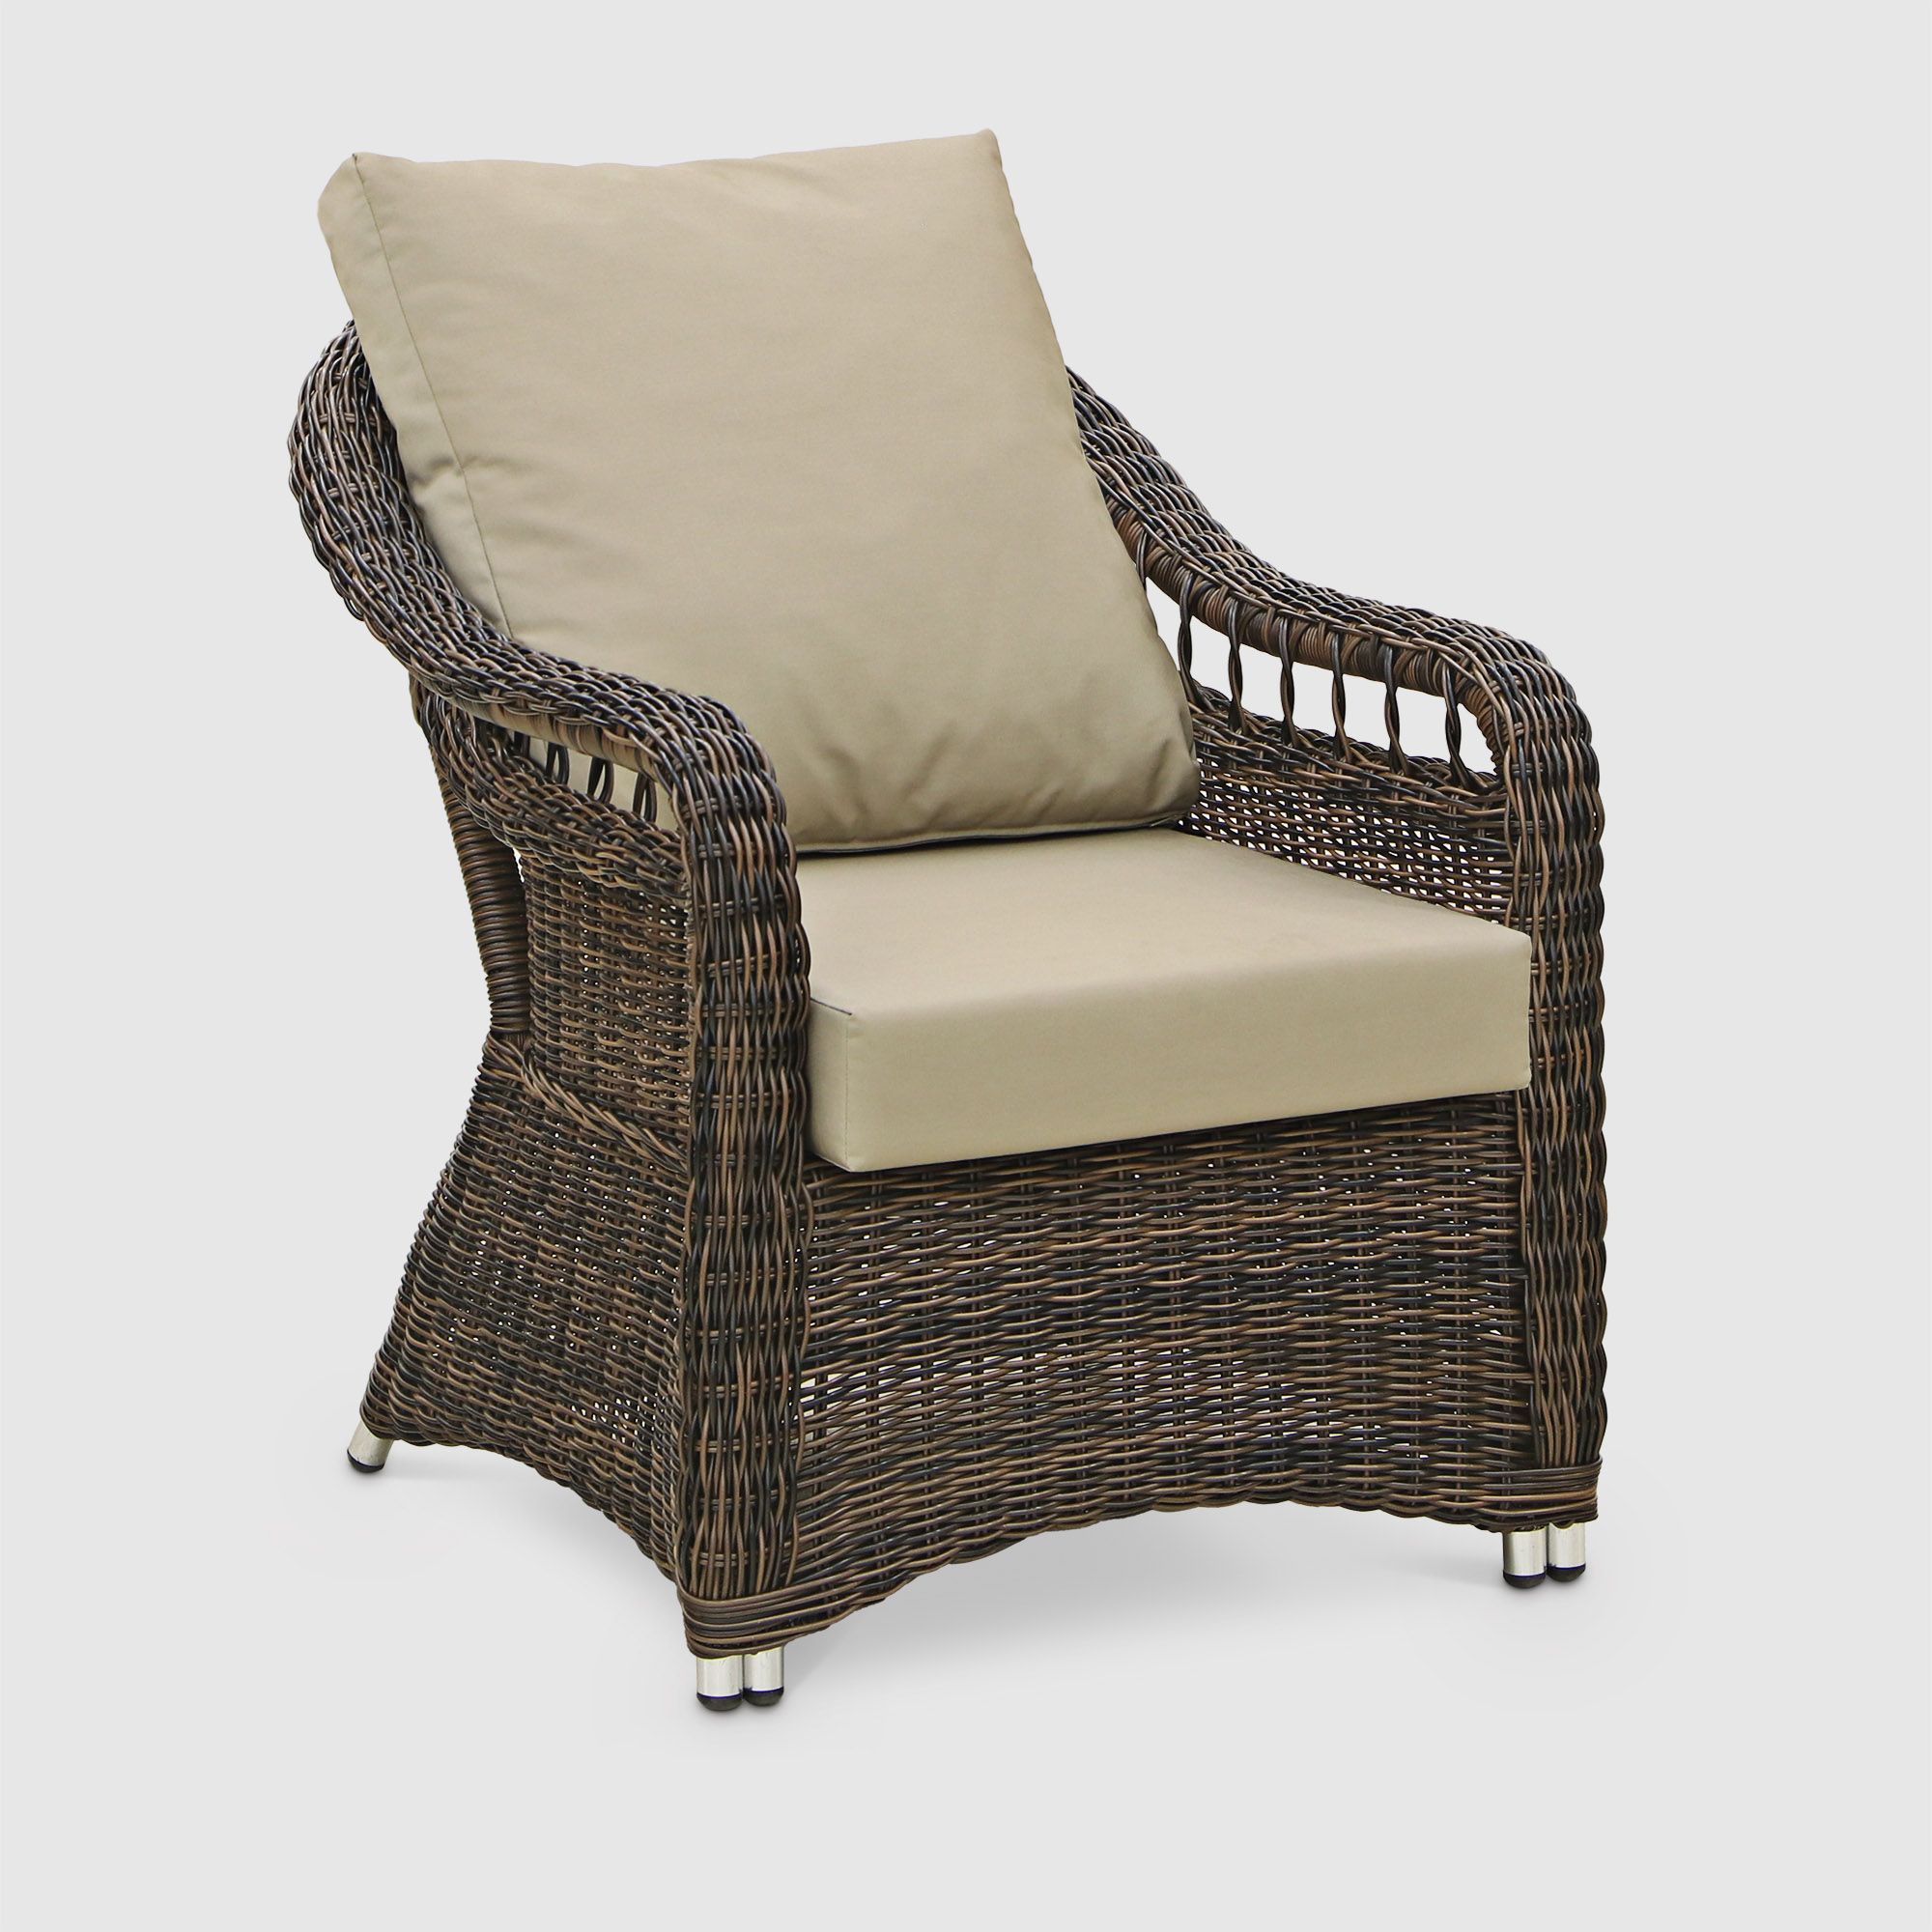 Комплект мебели NS Rattan Sky коричневый с бежевым 4 предмета, цвет бежевый, размер 180х78х78 - фото 7